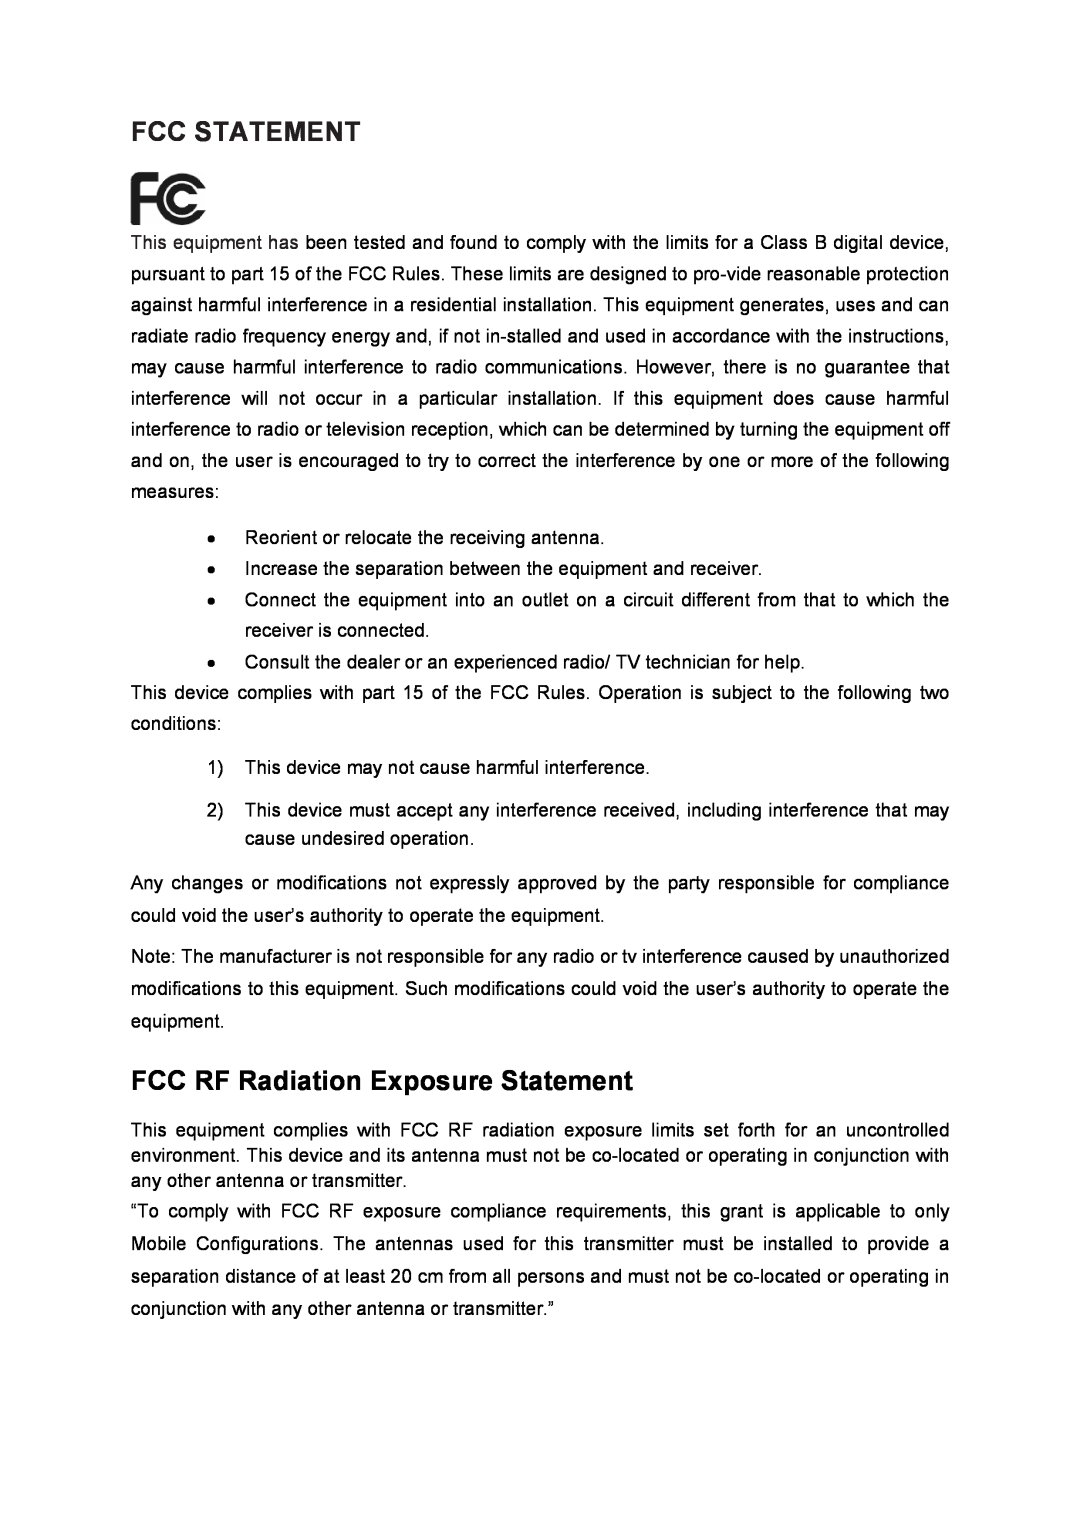 TP-Link td-w8961nd manual FCC RF Radiation Exposure Statement, Fcc Statement 